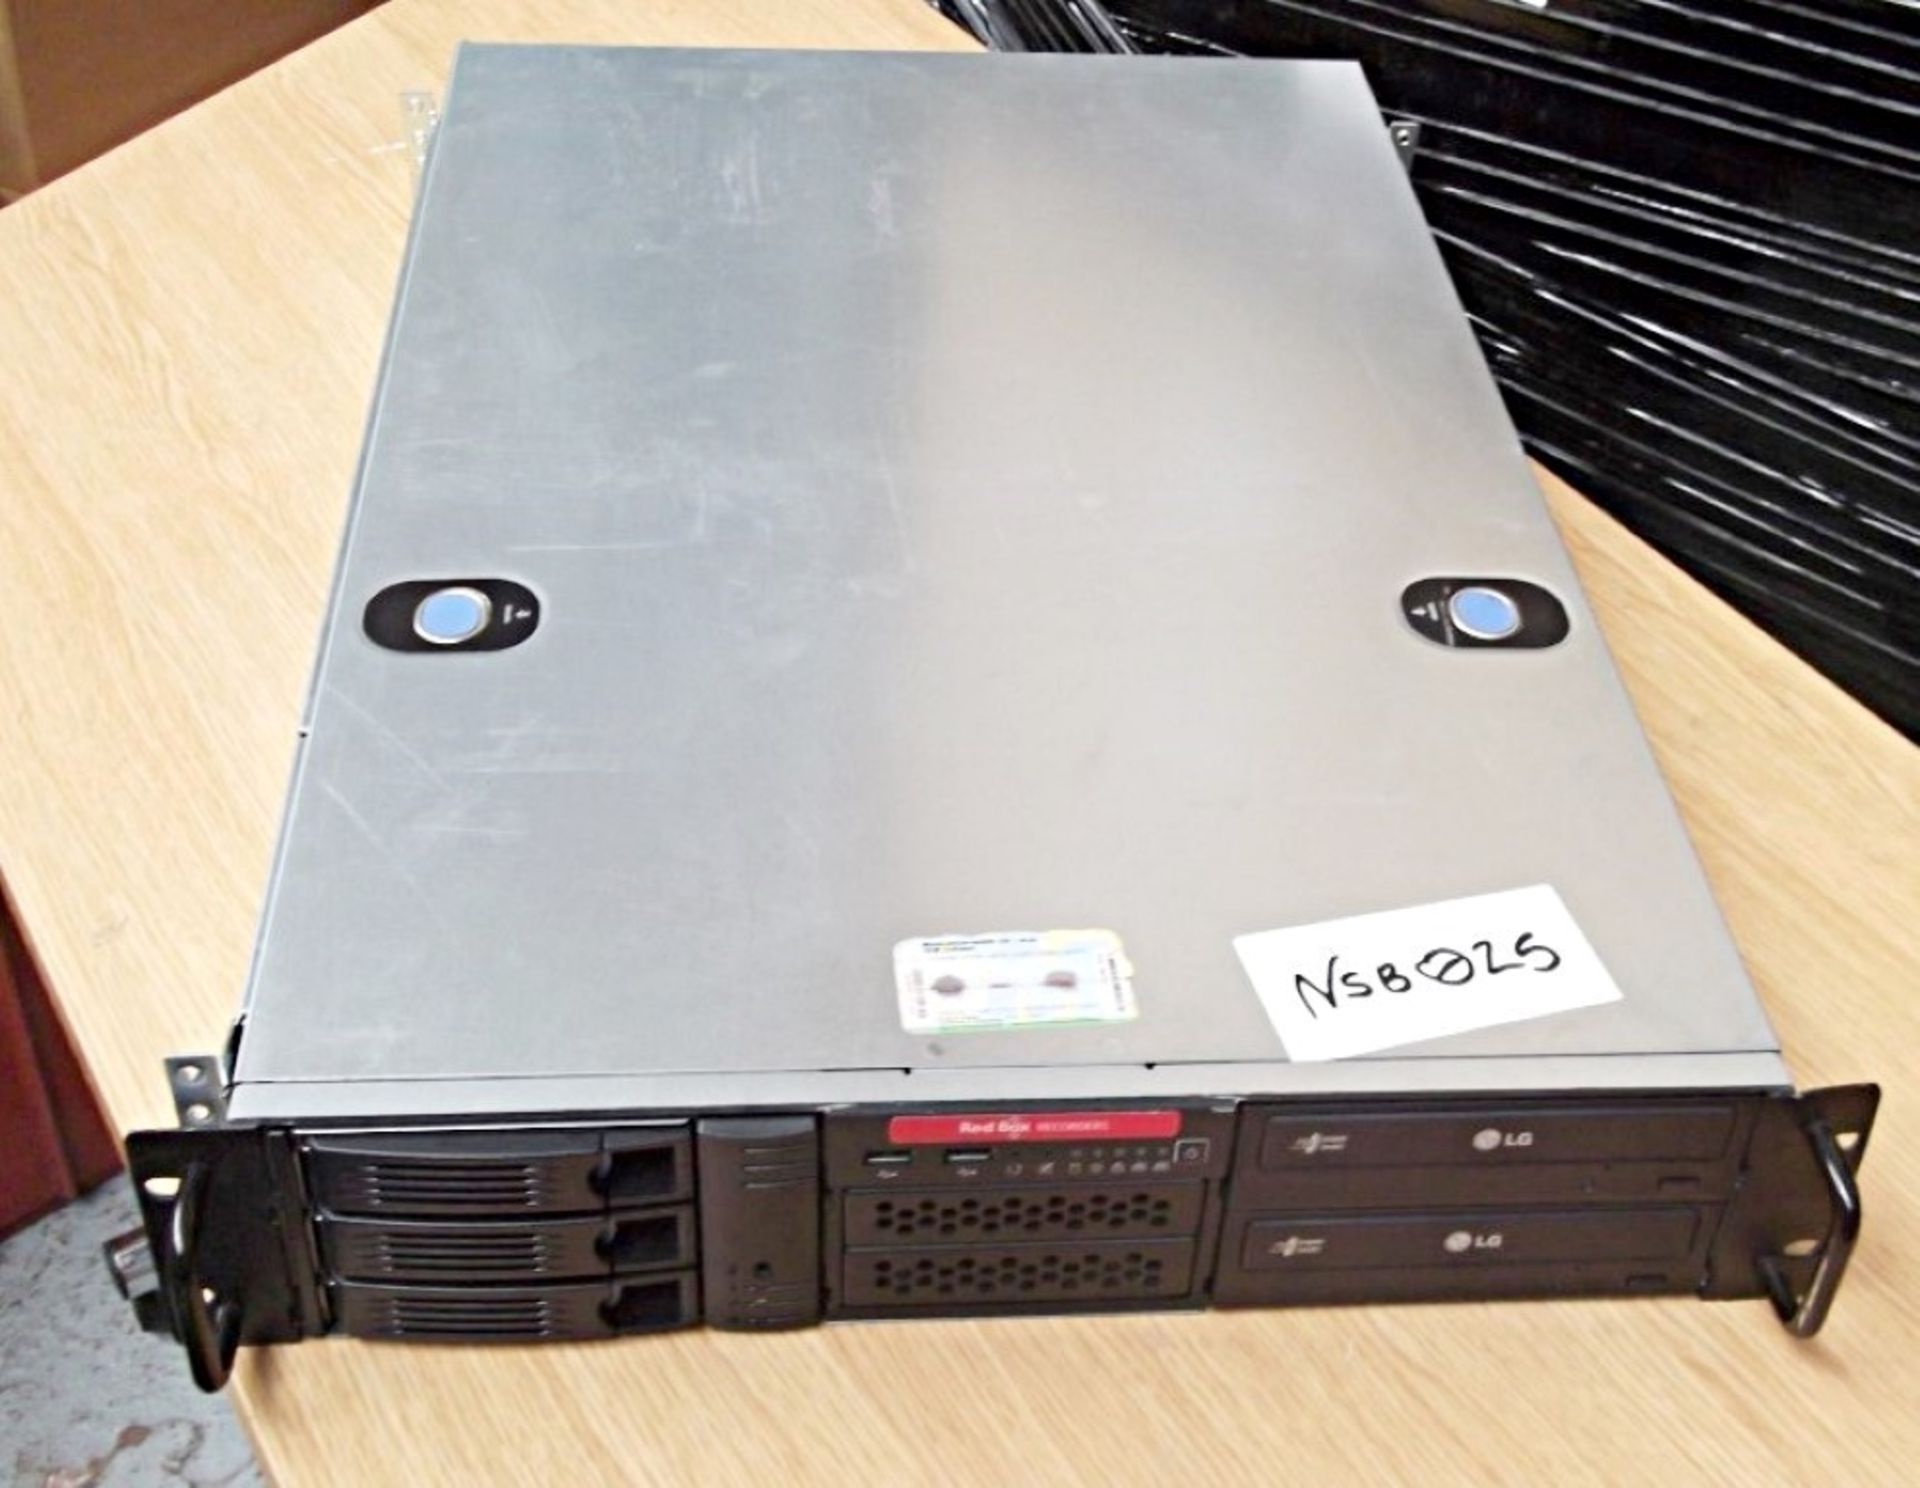 1 x Redbox Recorder - Enterprise IPT / Voice Recording Rackmount Server - Model RBR 2620 - Core 2 - Image 4 of 5